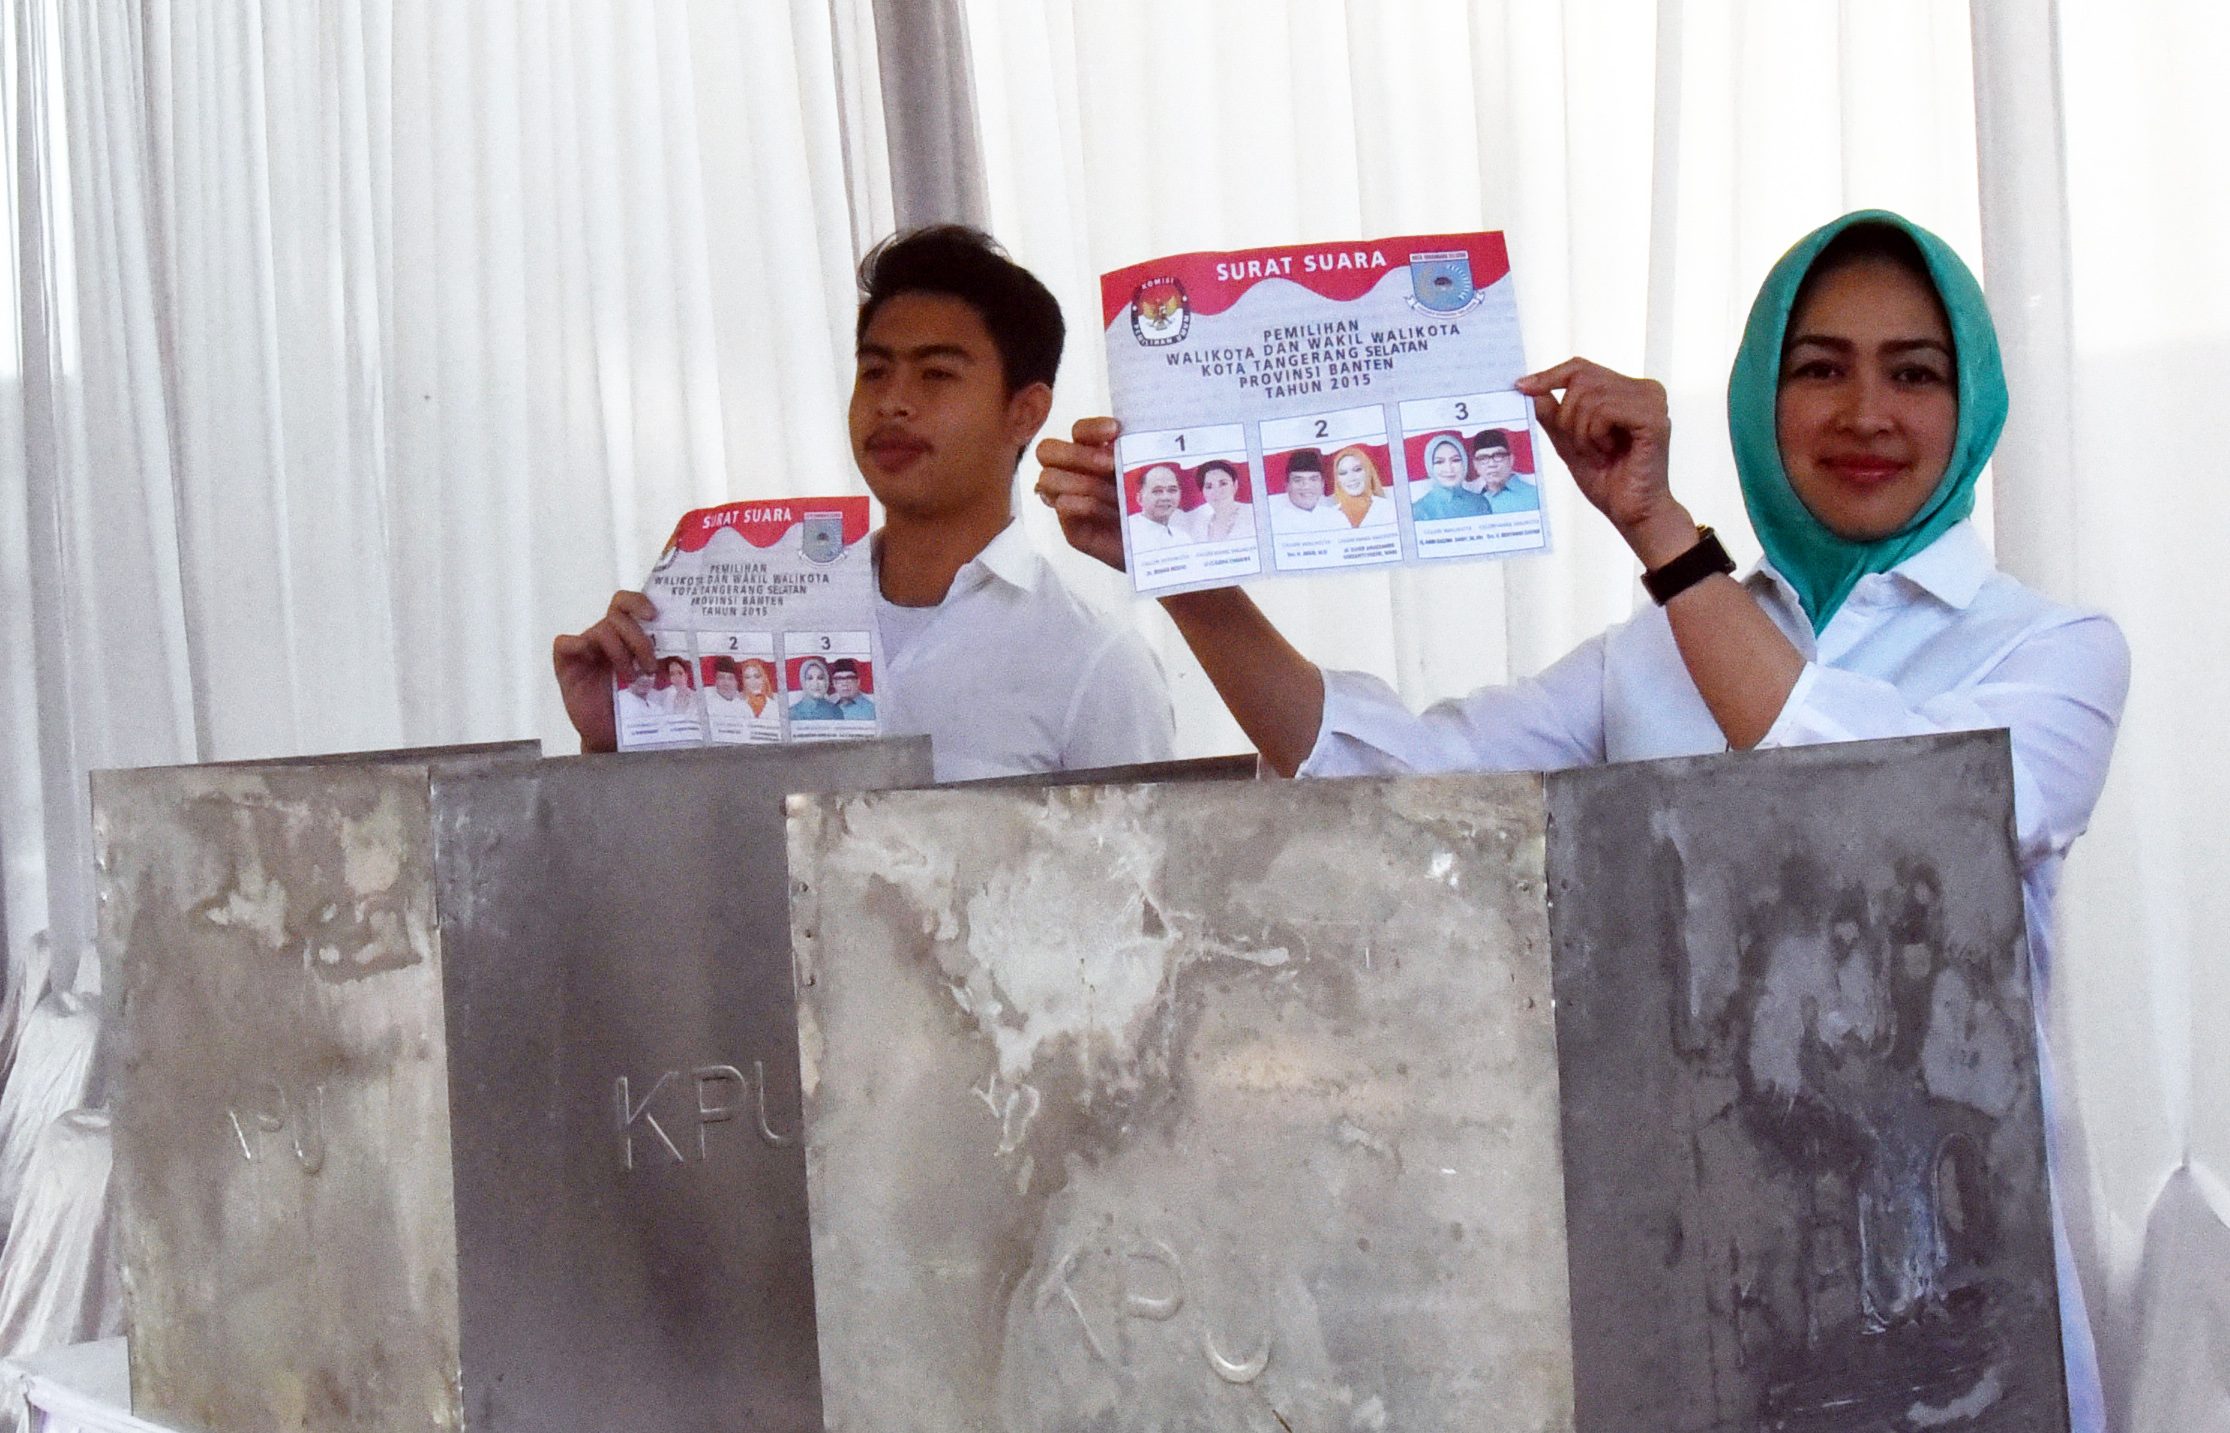 Calon Wali Kota Tangerang Selatan yang juga petahana Airin Rachmi Diany menggunakan hak pilih di TPS 17 Serpong Utara, Tangerang Selatan, Banten, pada 9 Desember 2015. Foto oleh Muhammad Iqbal/Antara 